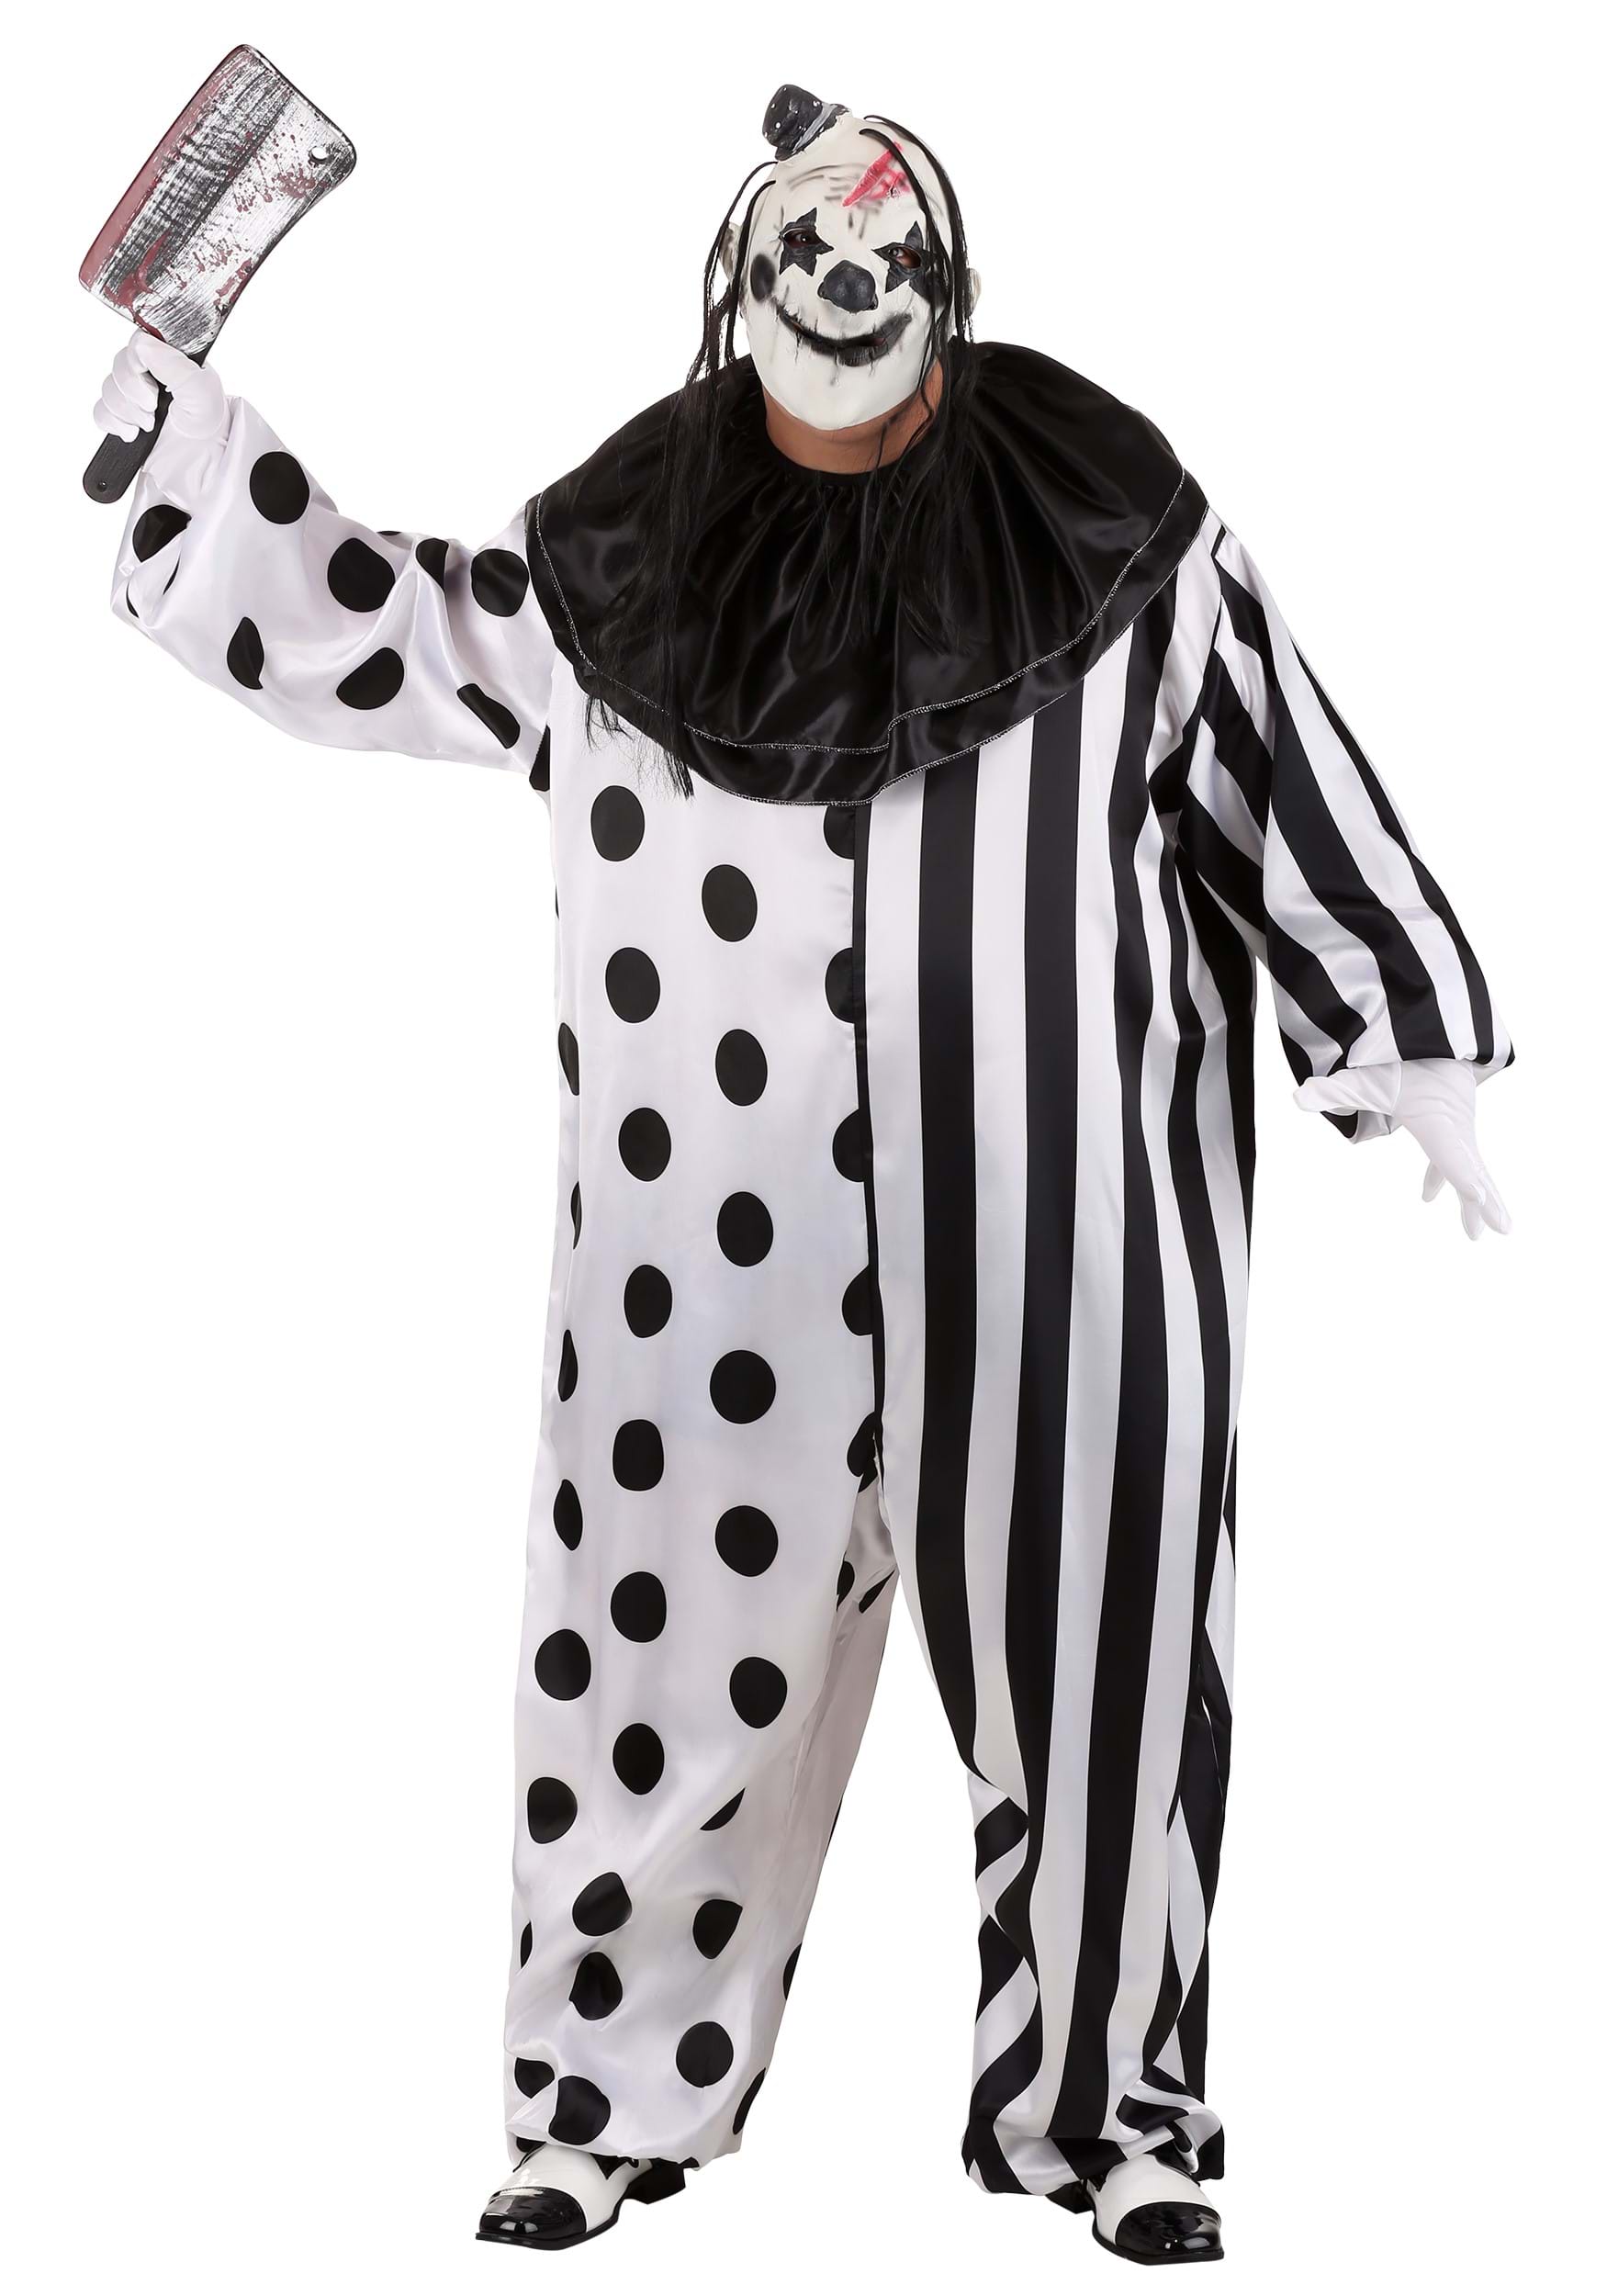 SCARY JOKER FACE MASK Mens Evil Horror Clown Halloween Costume Accessory NEW UK 